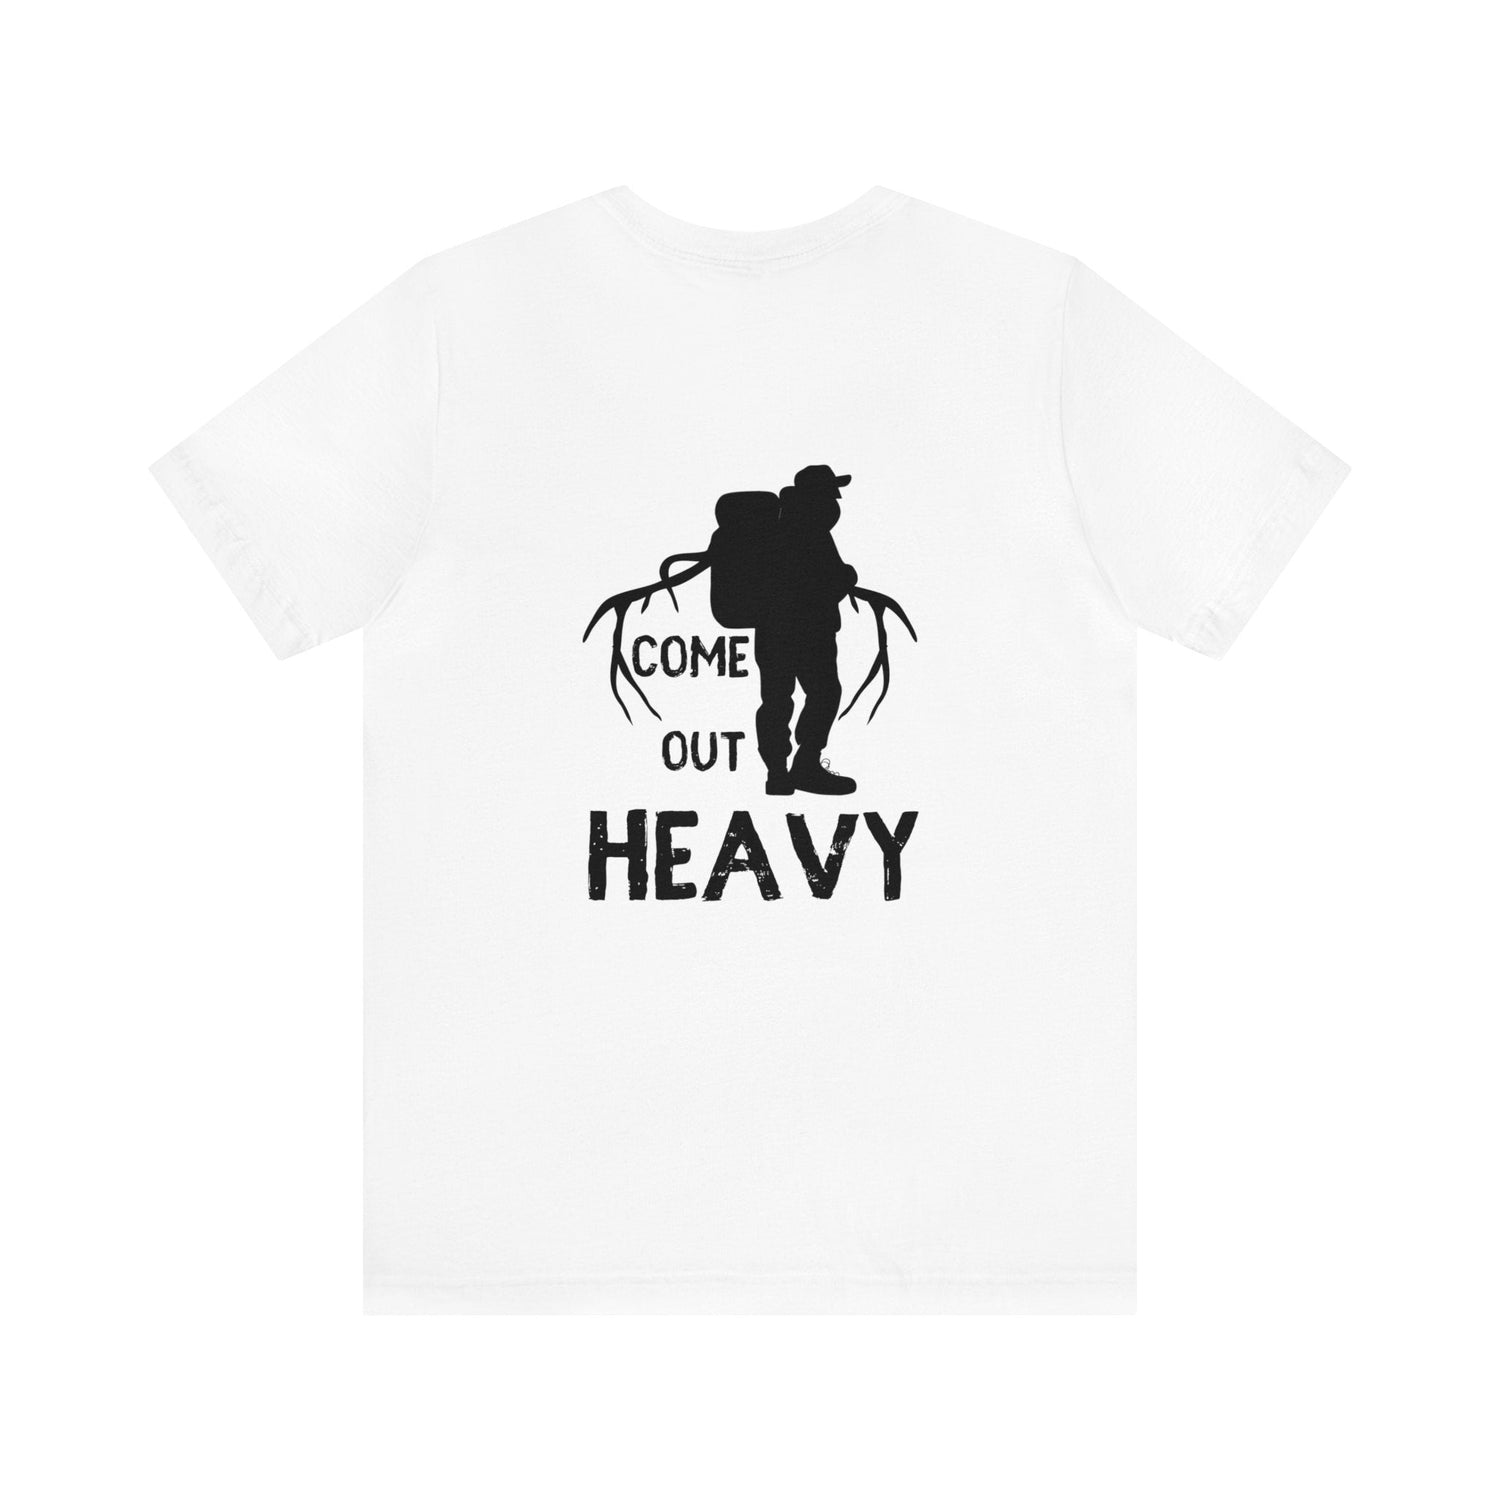 Western elk hunting t-shirt, color white, back design placement